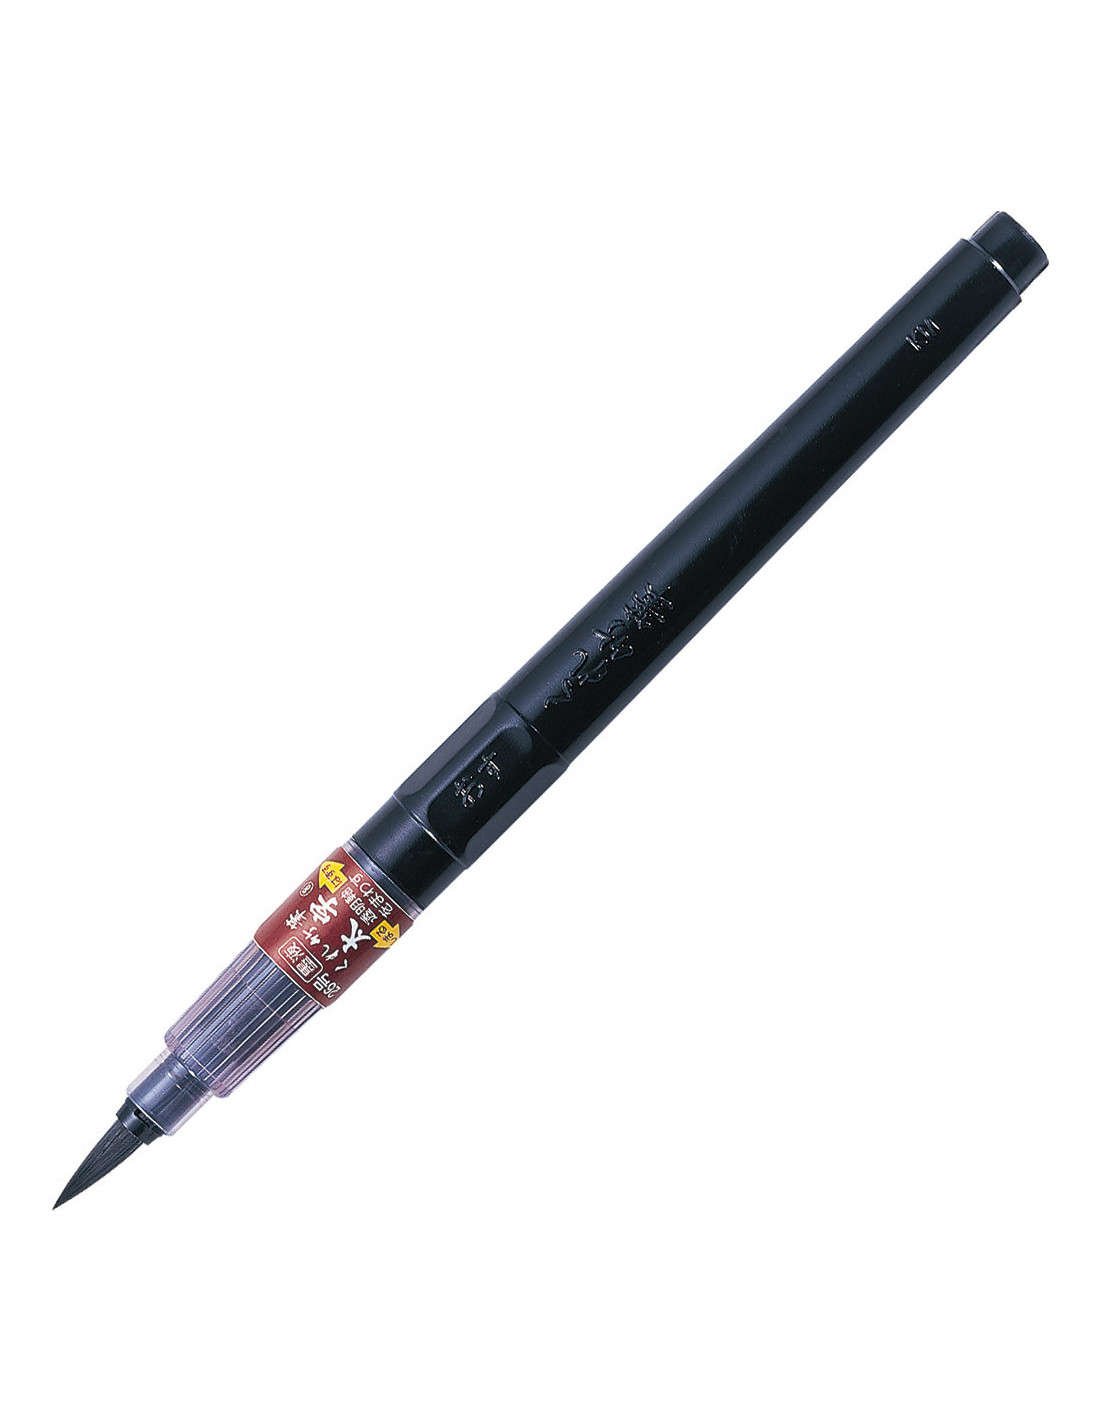 Kuretake Brush Pen No. 26 - Broad